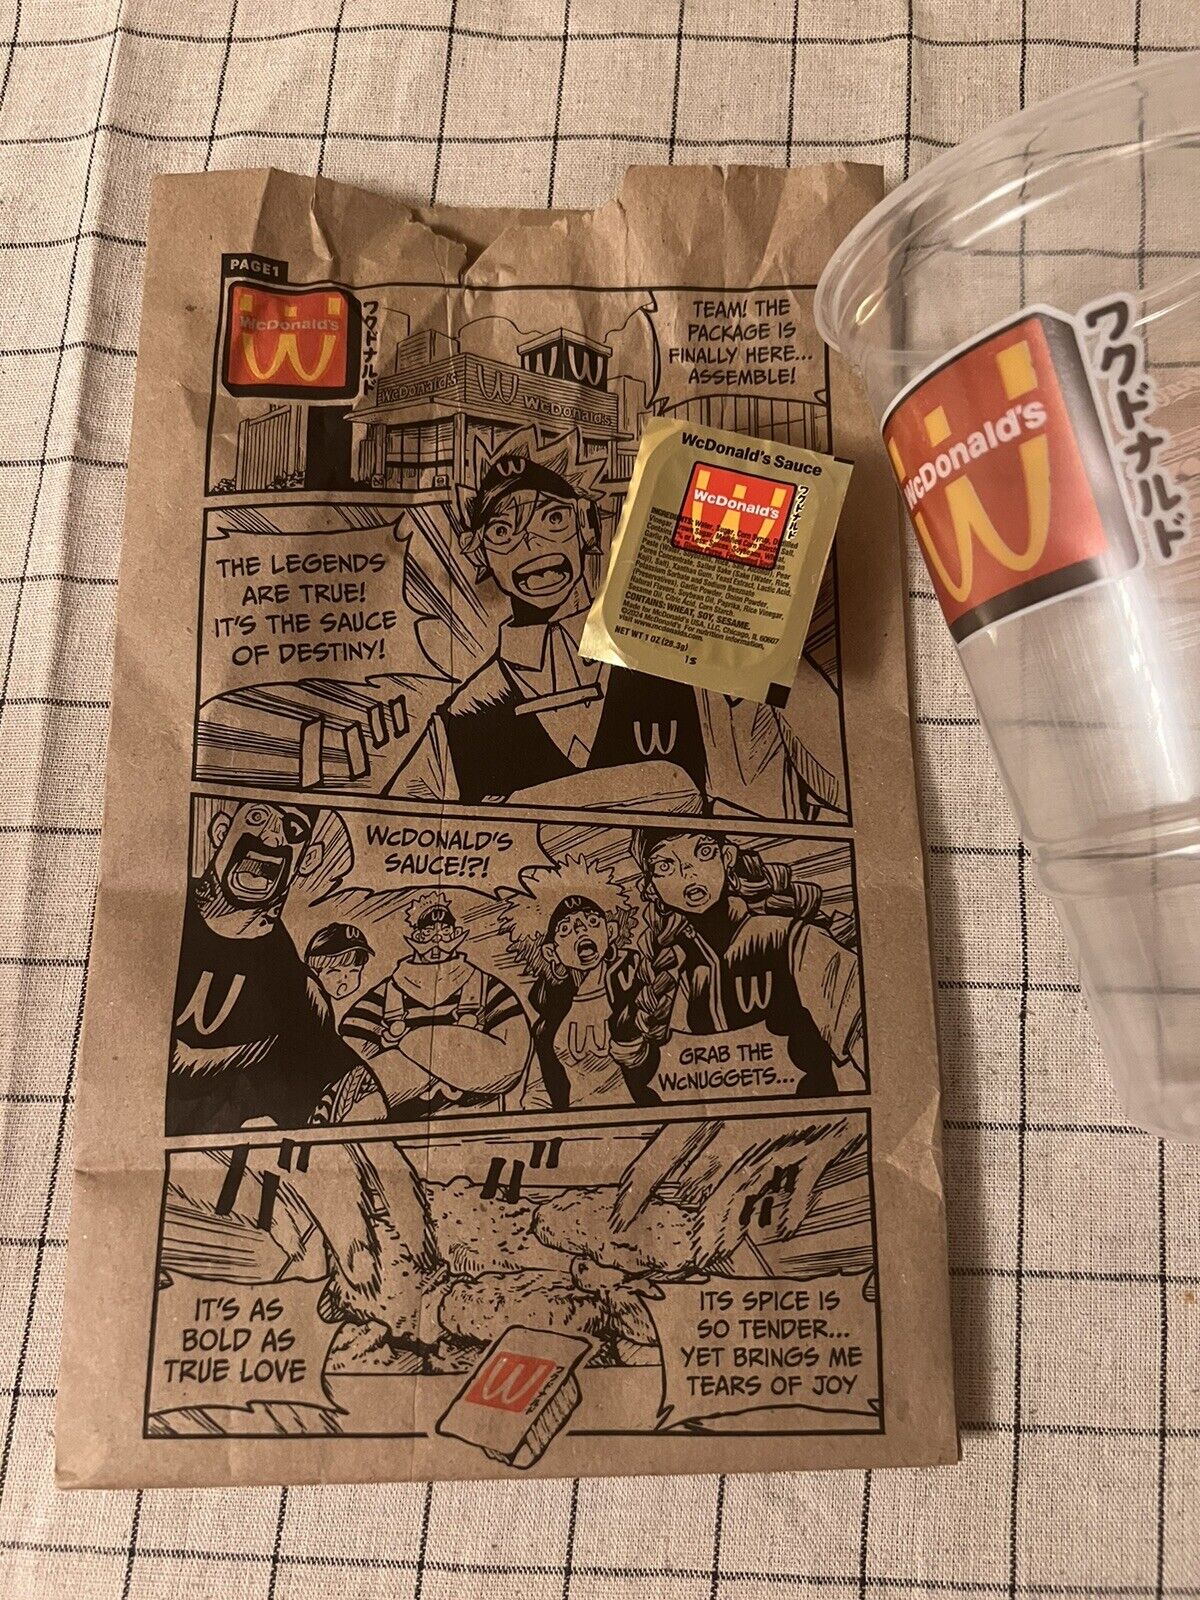 WcDonald’s McDonald’s Savory Chili McNuggets Sauce Cup Manga Bag Acky Bright